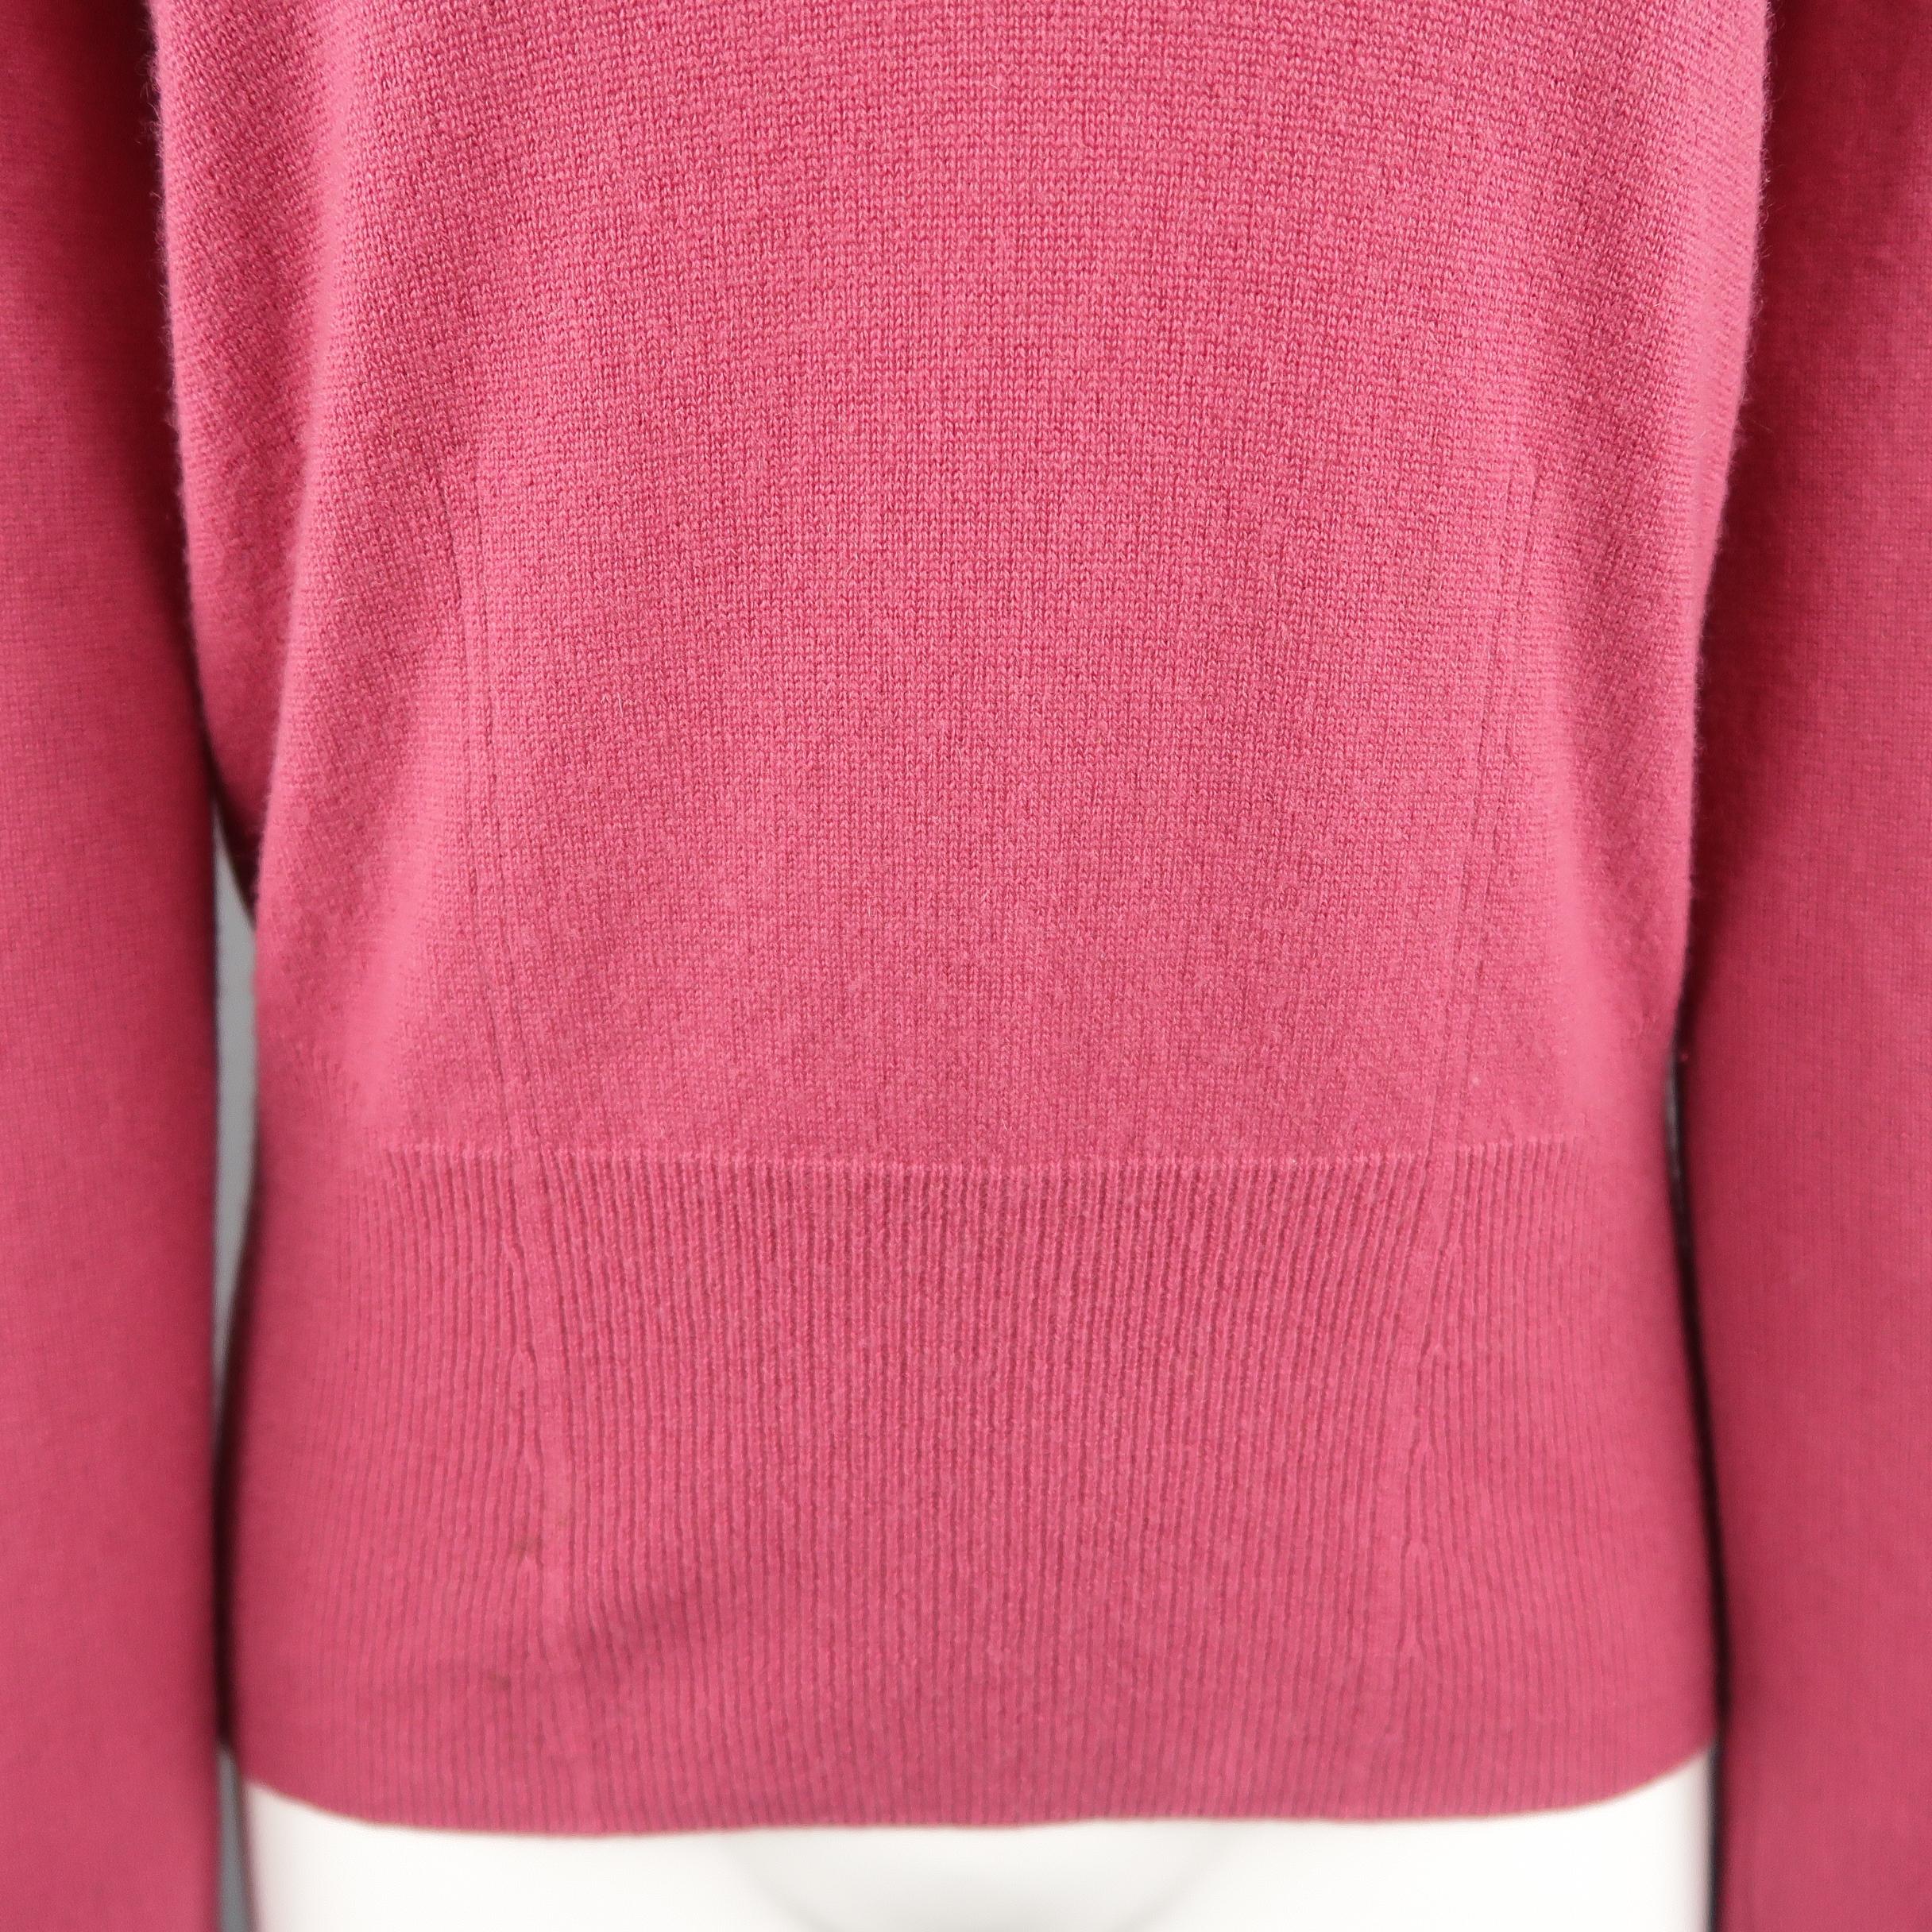 raspberry pink sweater